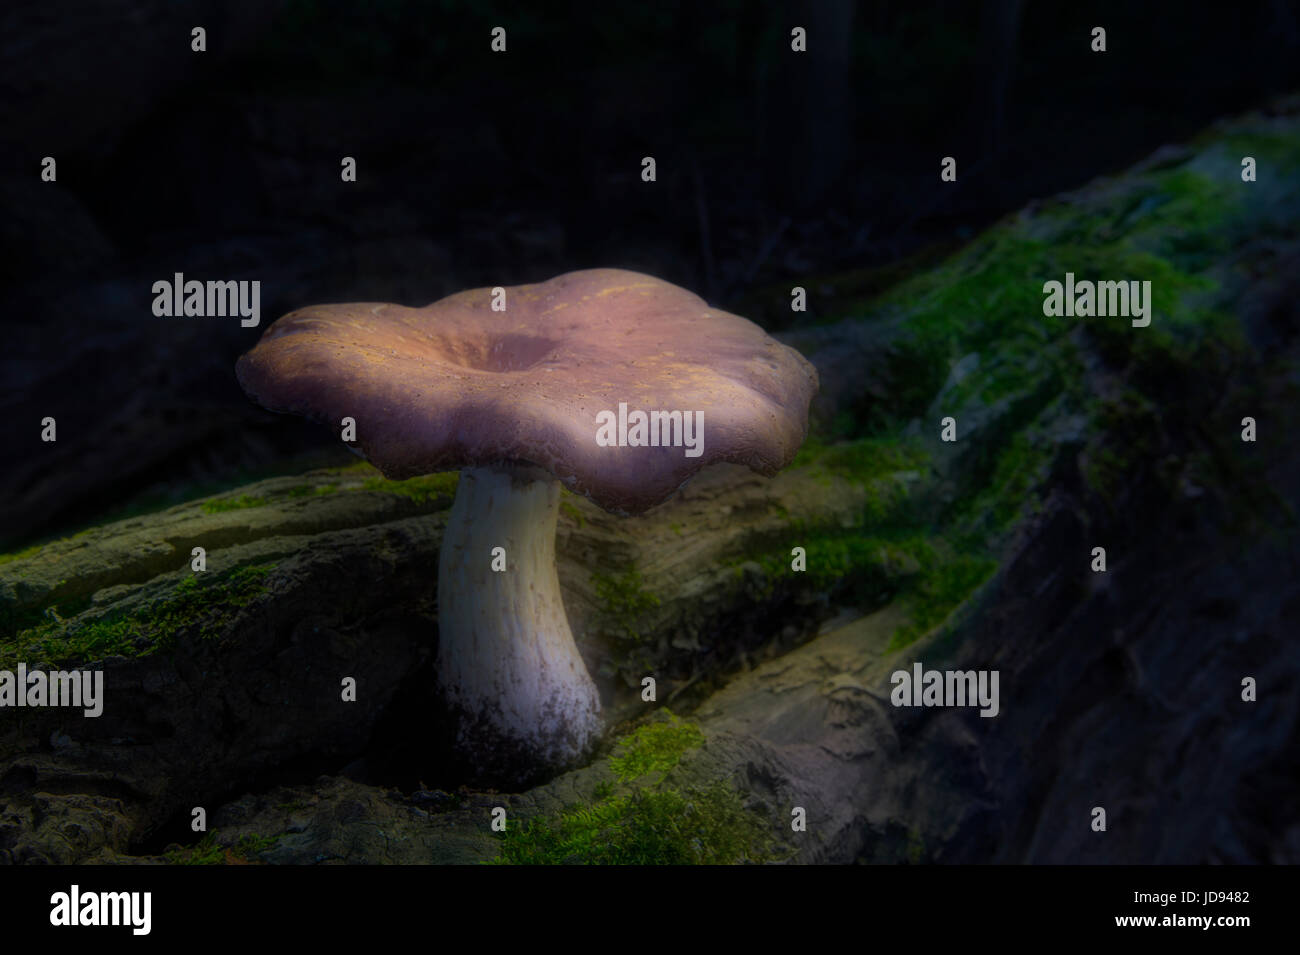 Lone Mystical Mushroom On Fallen Mossy Log In Forest Stock Photo